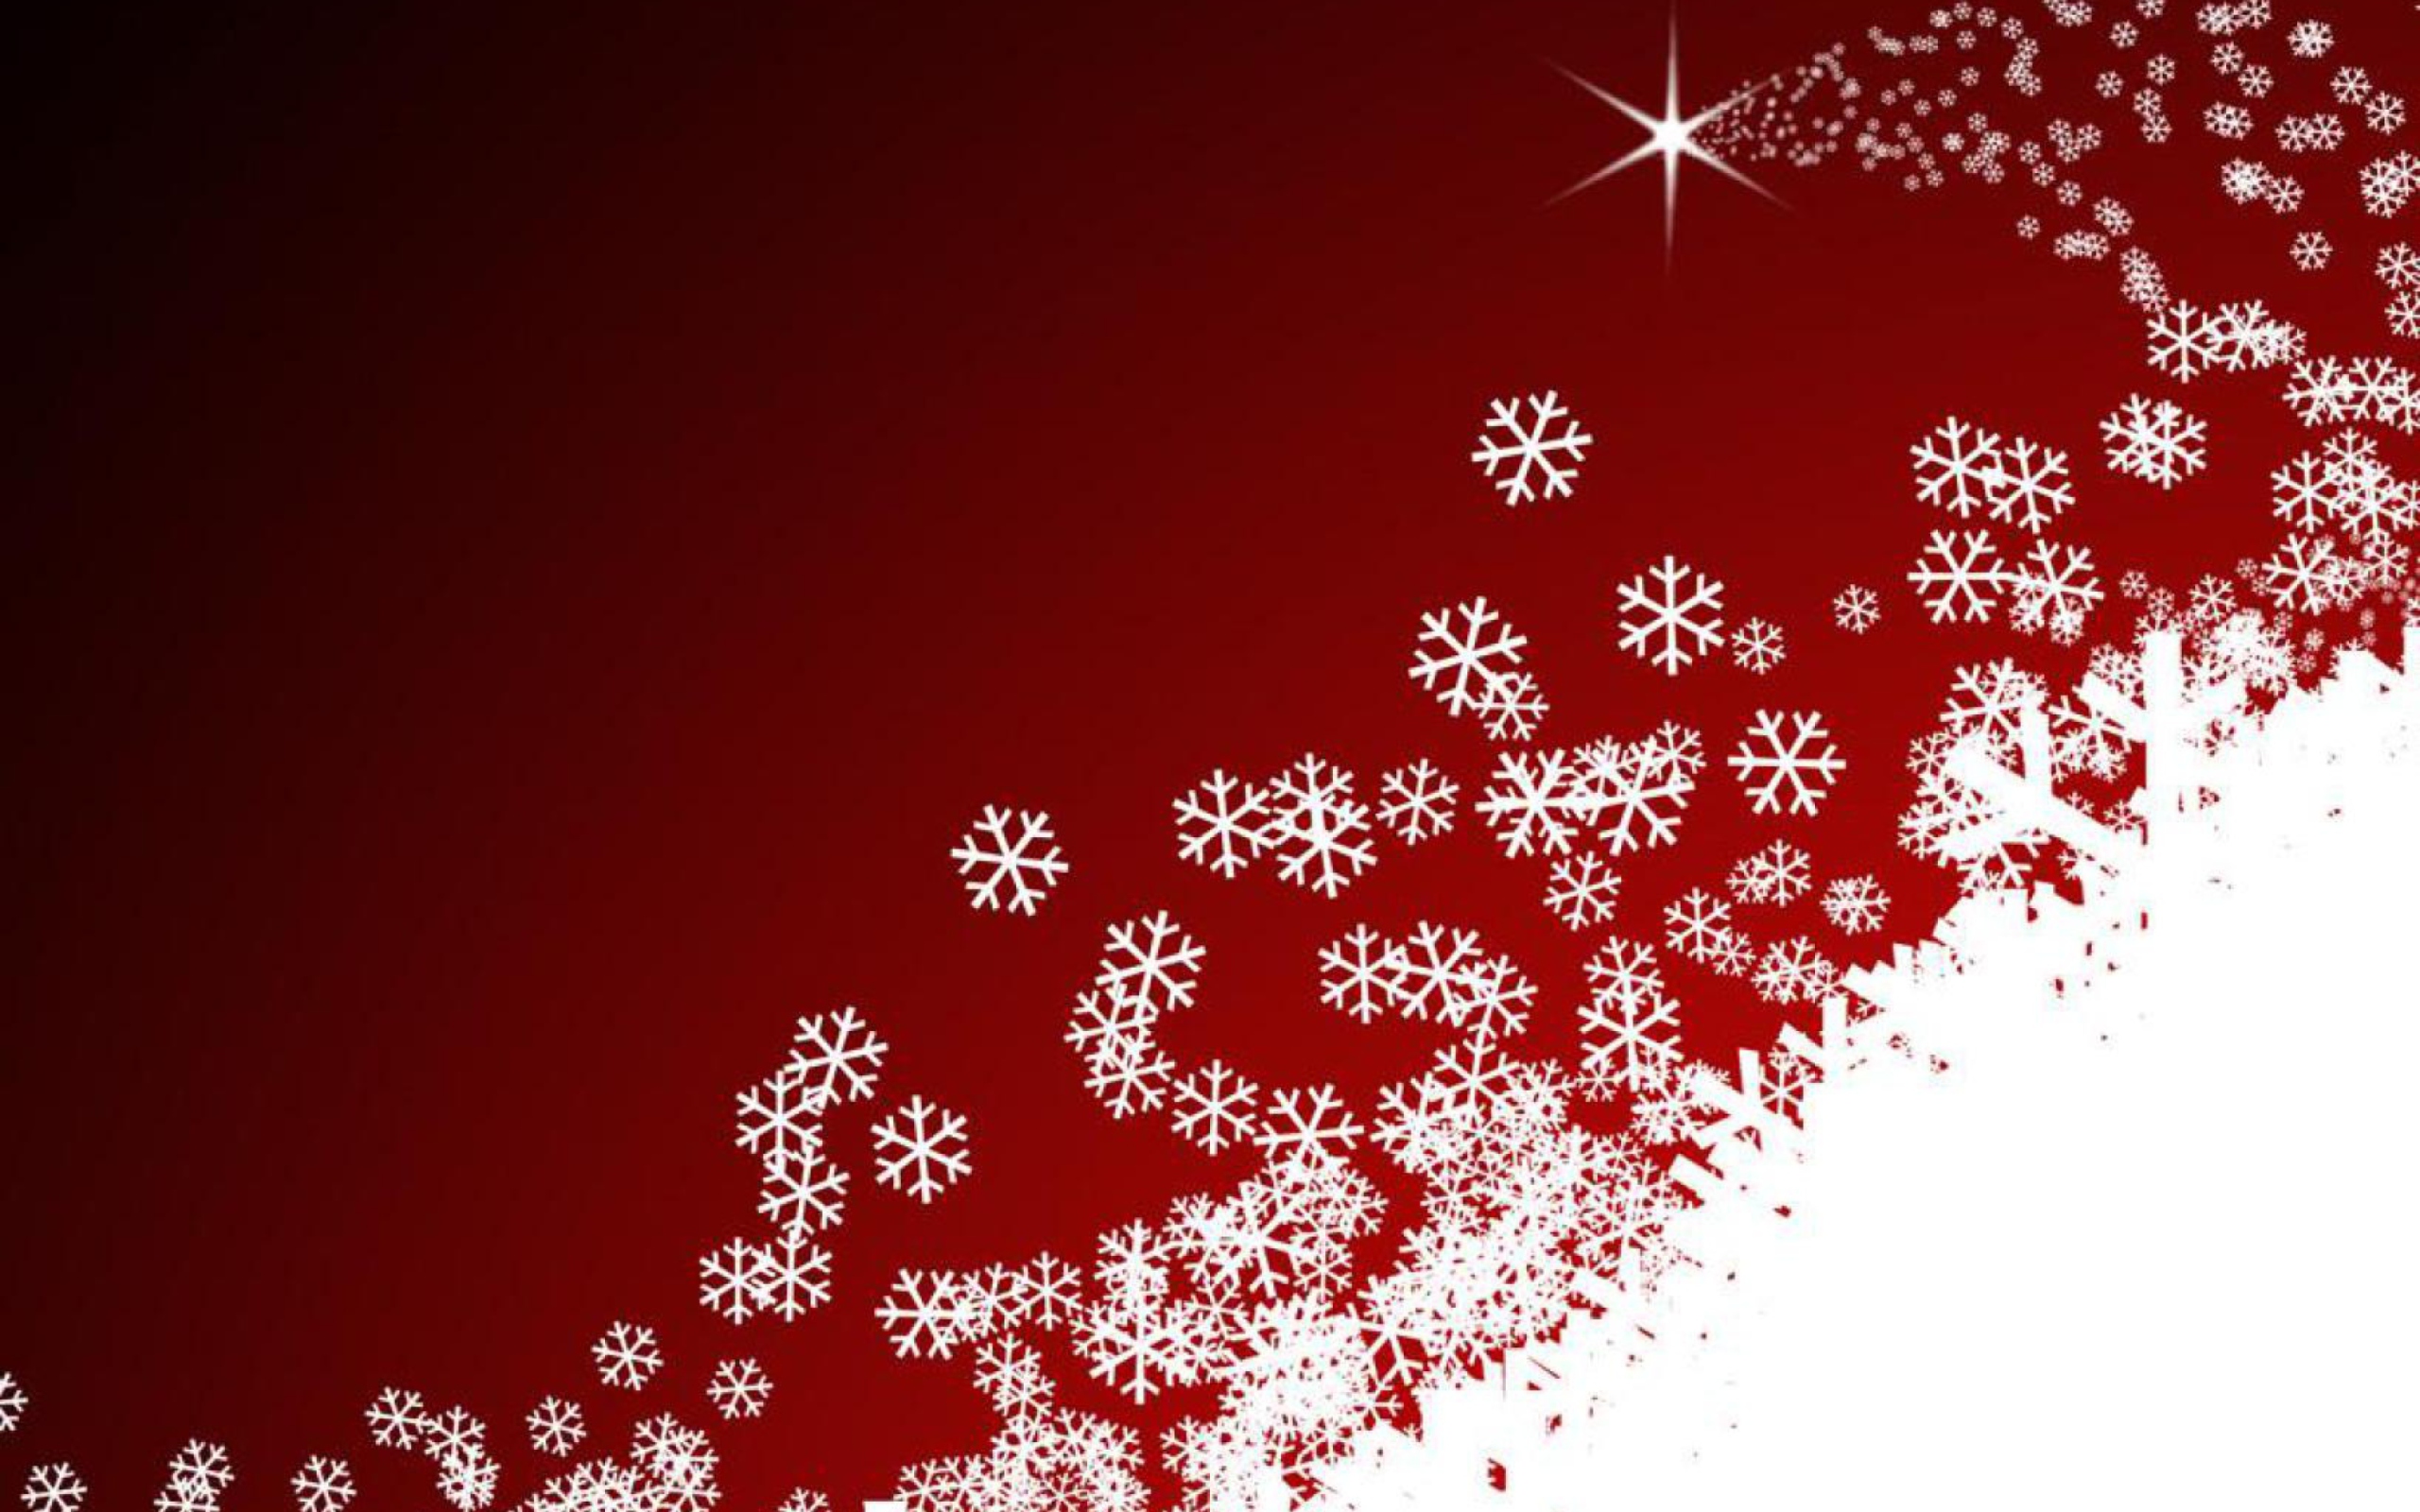 Snowflakes wallpaper 2560x1600